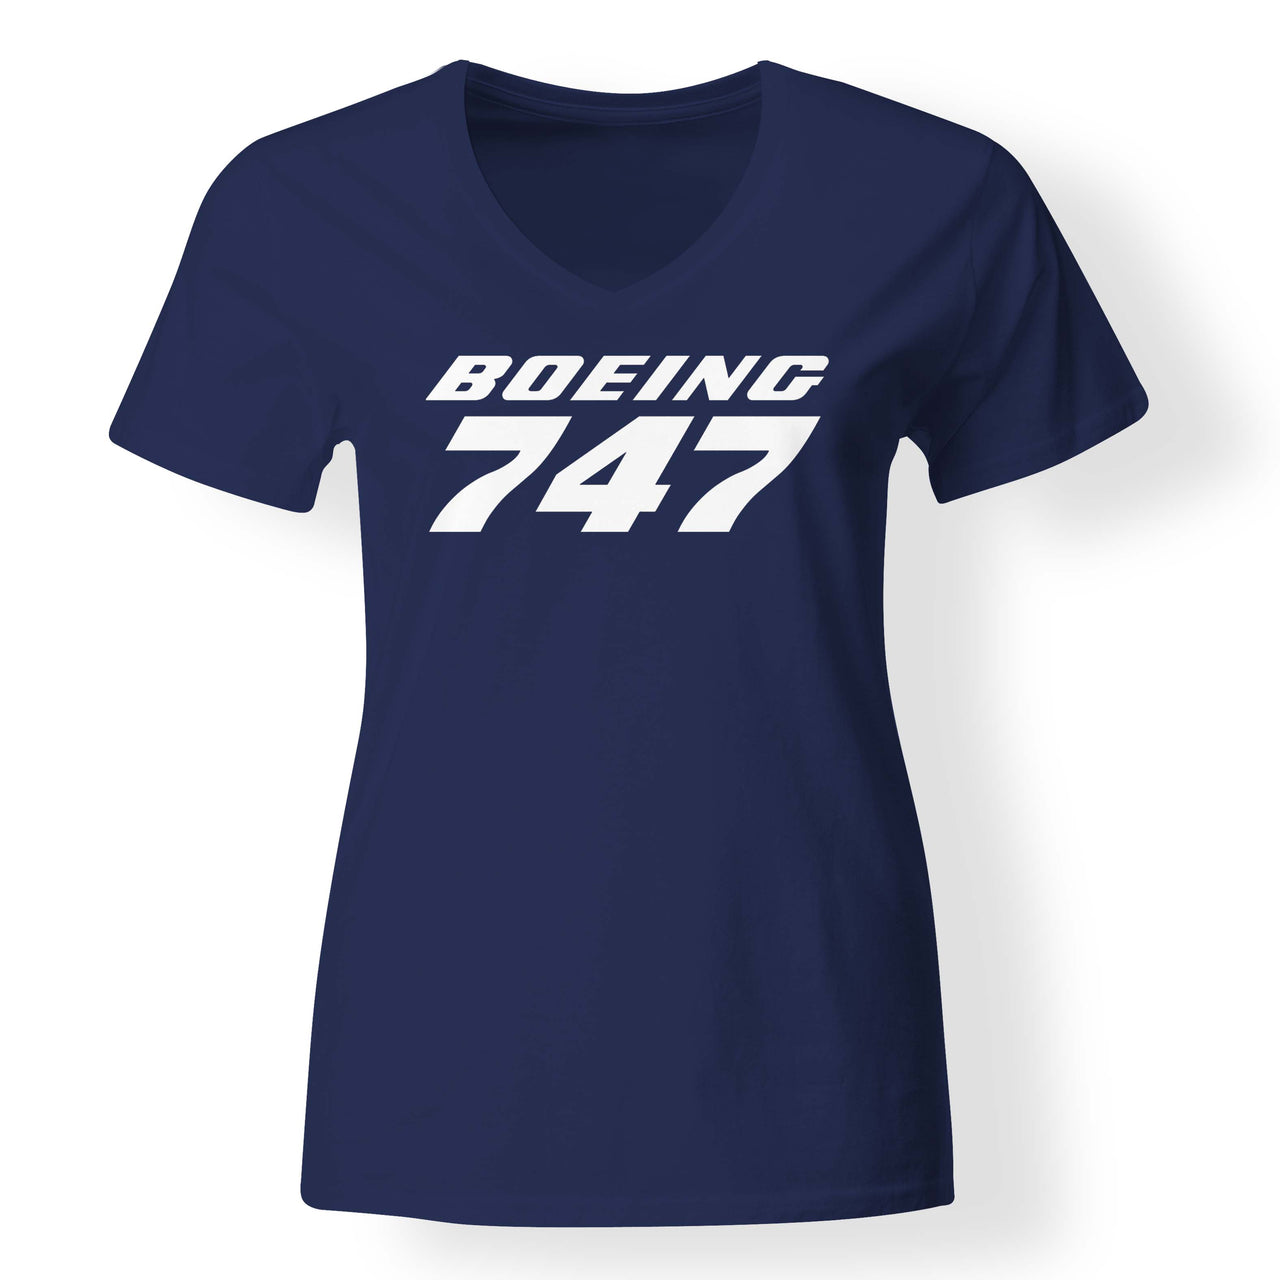 Boeing 747 & Text Designed V-Neck T-Shirts